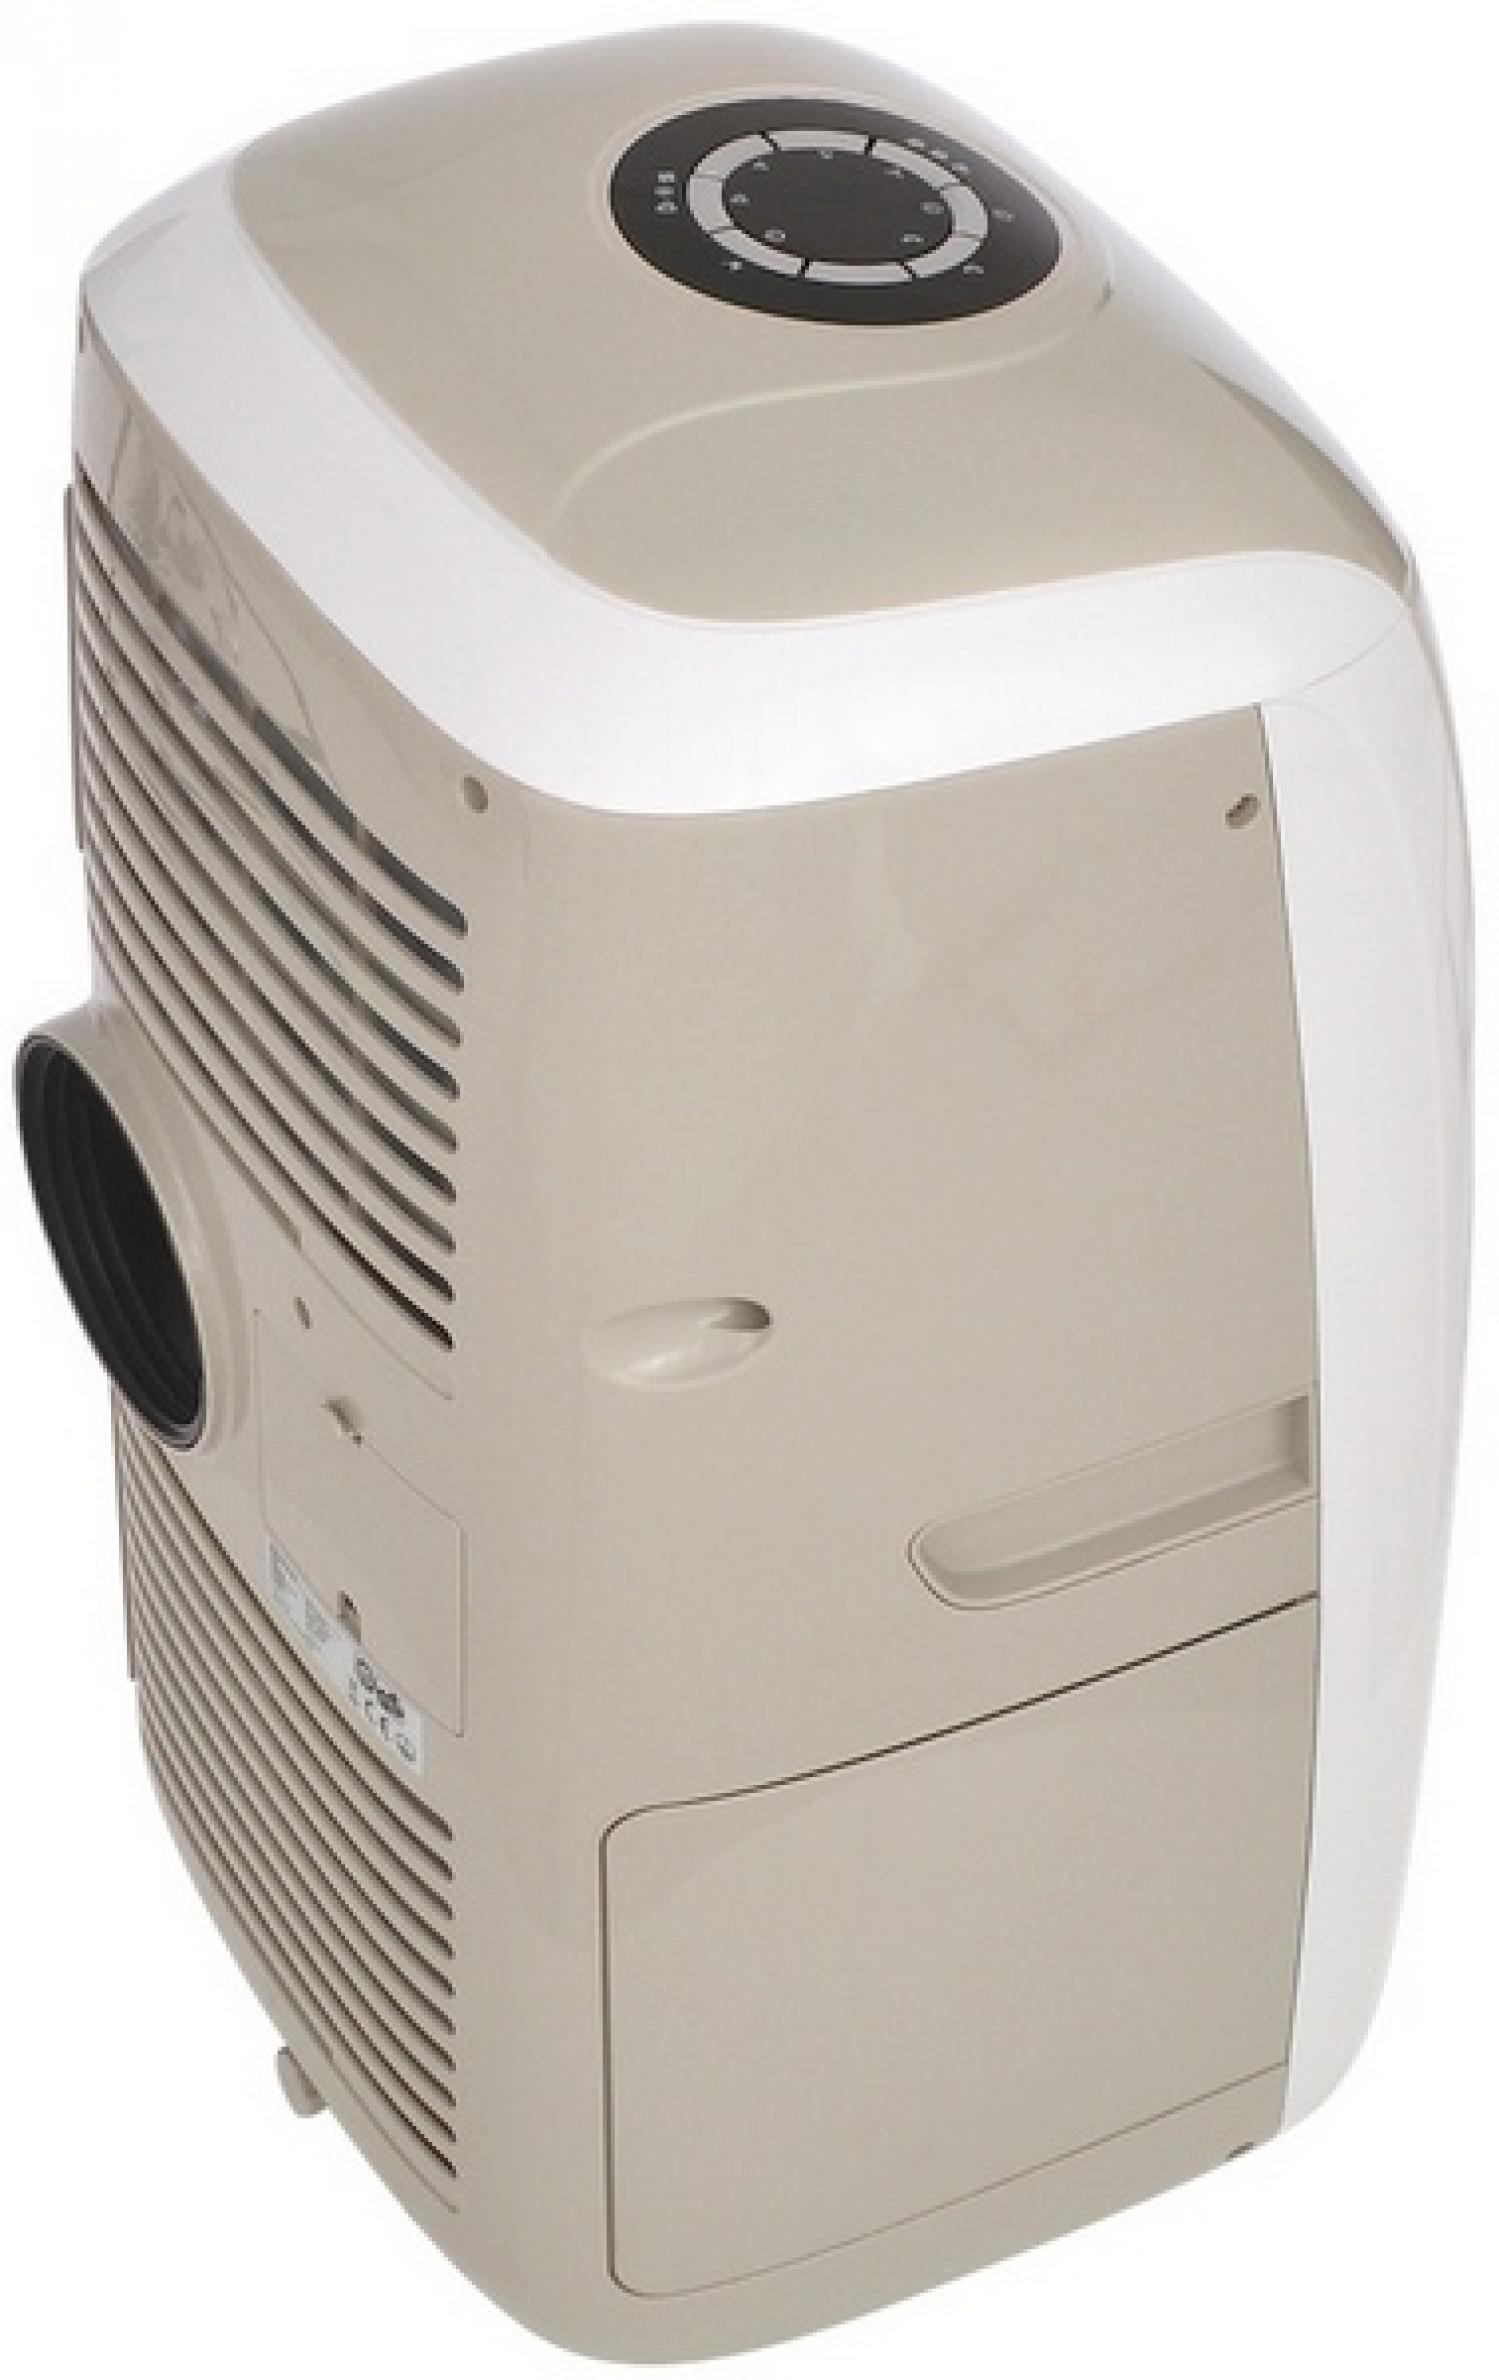 WDH 40 conditioner WDH-FGA1263B Weiß m², Raumgröße: air A) Klimagerät (Max. EEK: